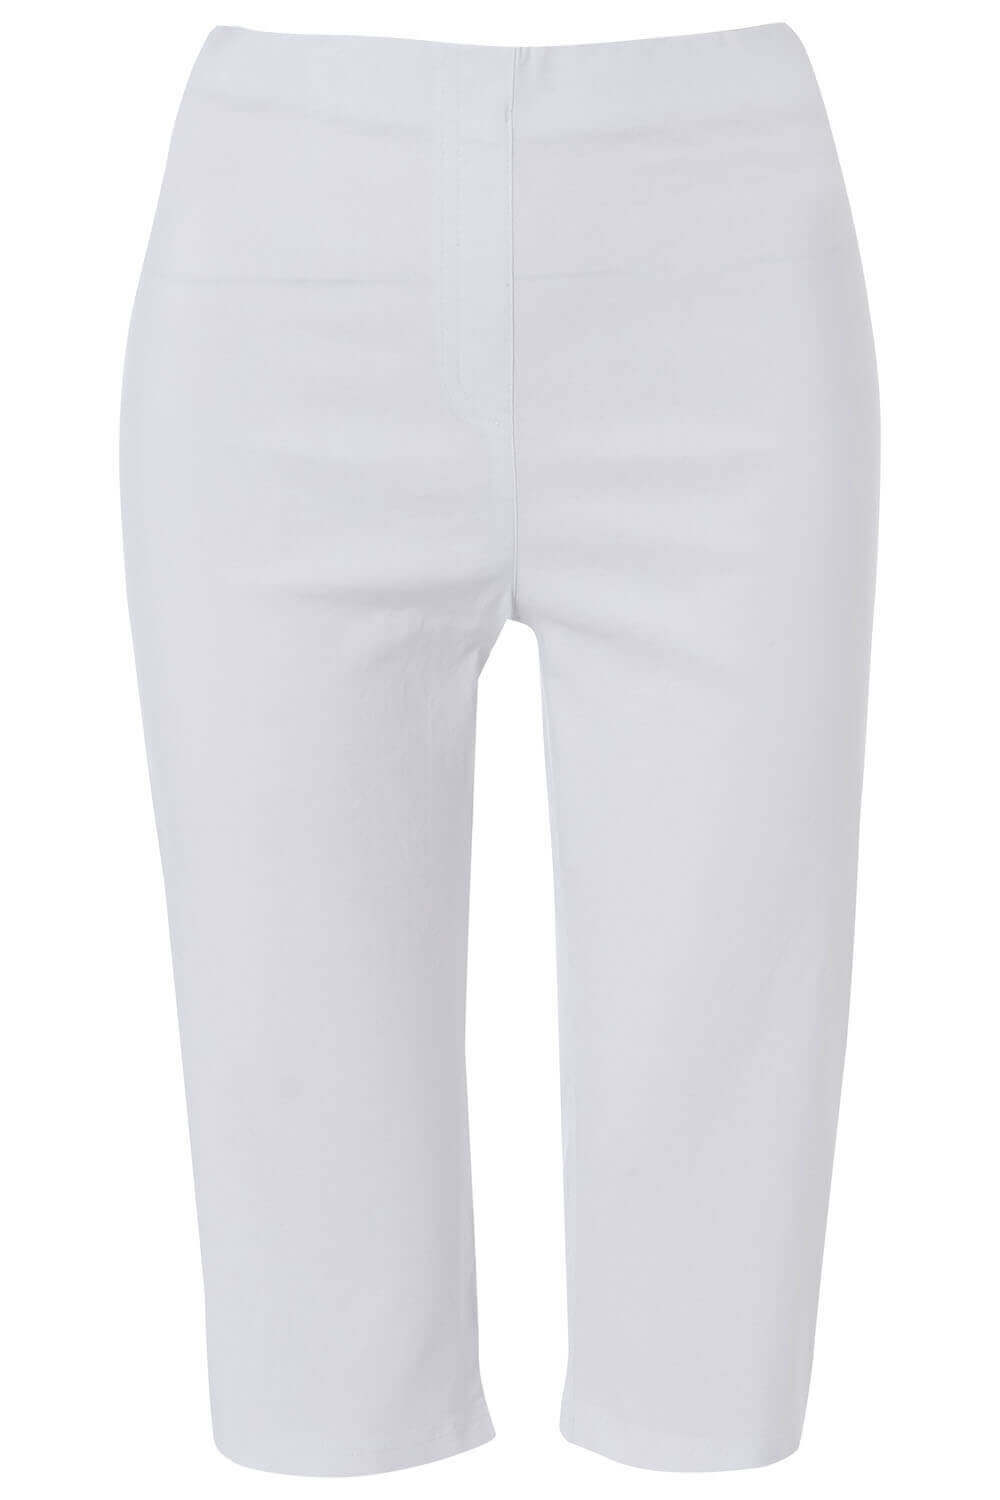 White Knee Length Stretch Shorts, Image 4 of 4